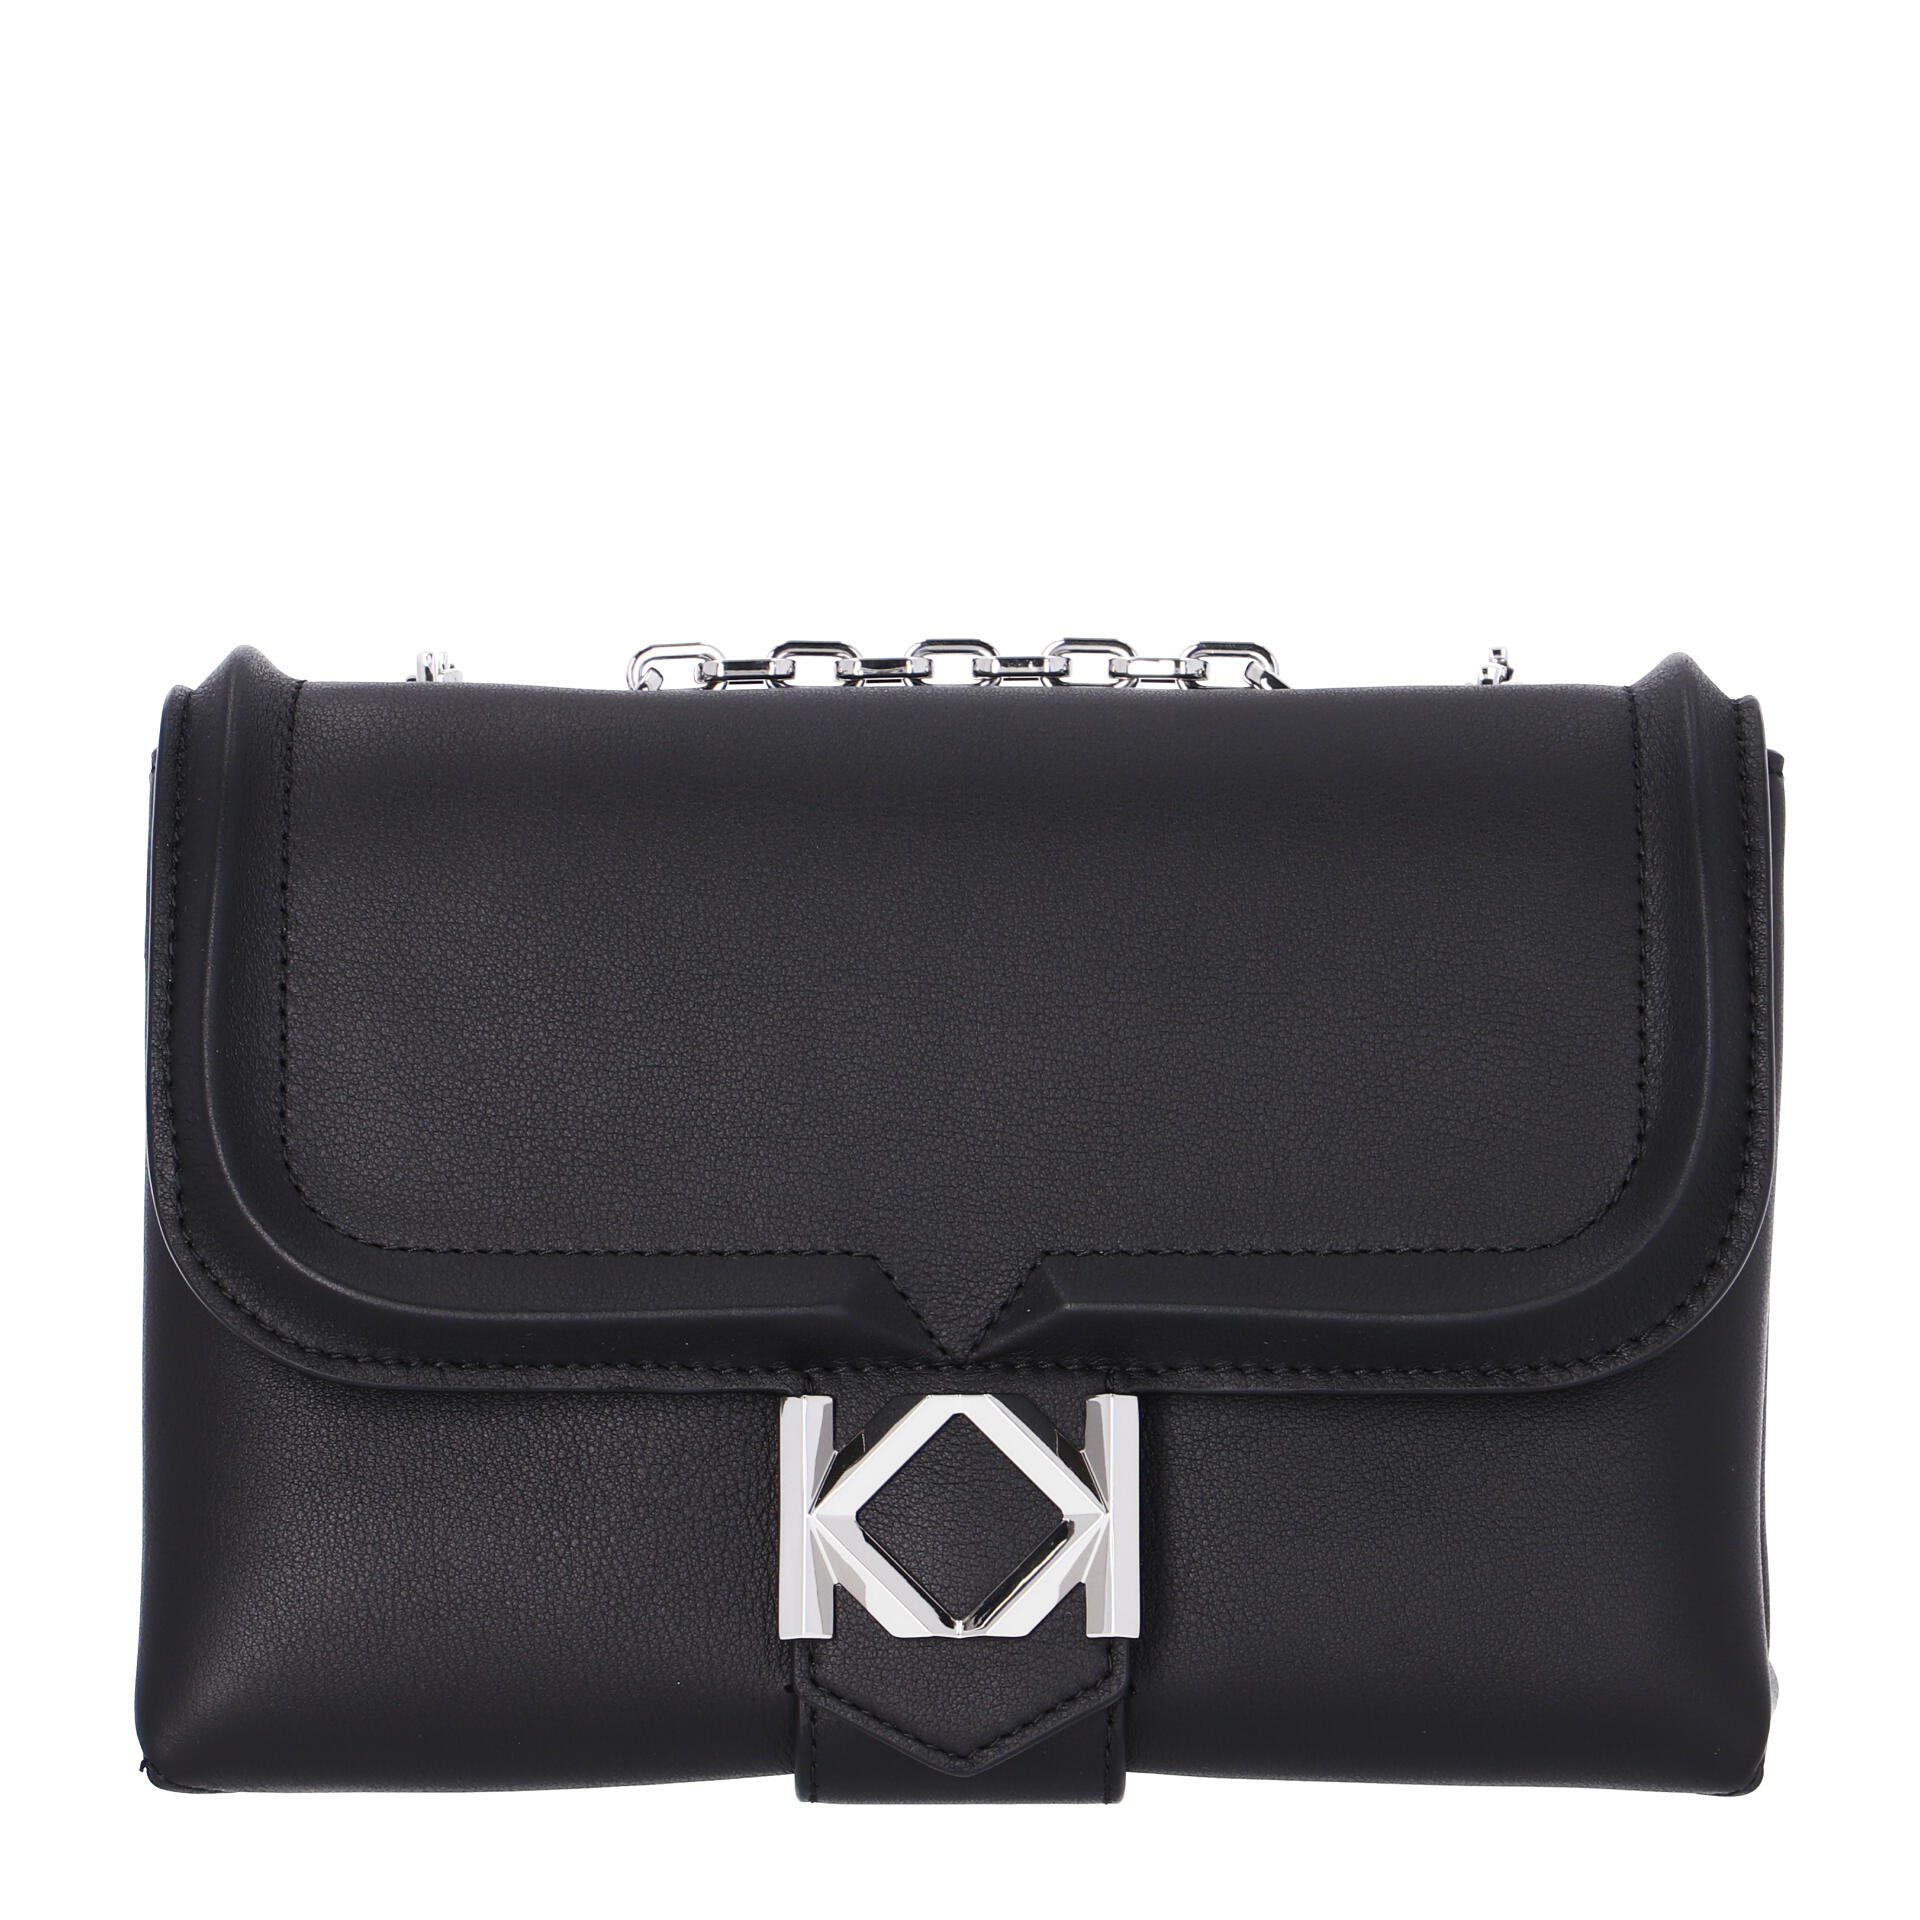 Karl Lagerfeld Miss K Small Shoulderbag black